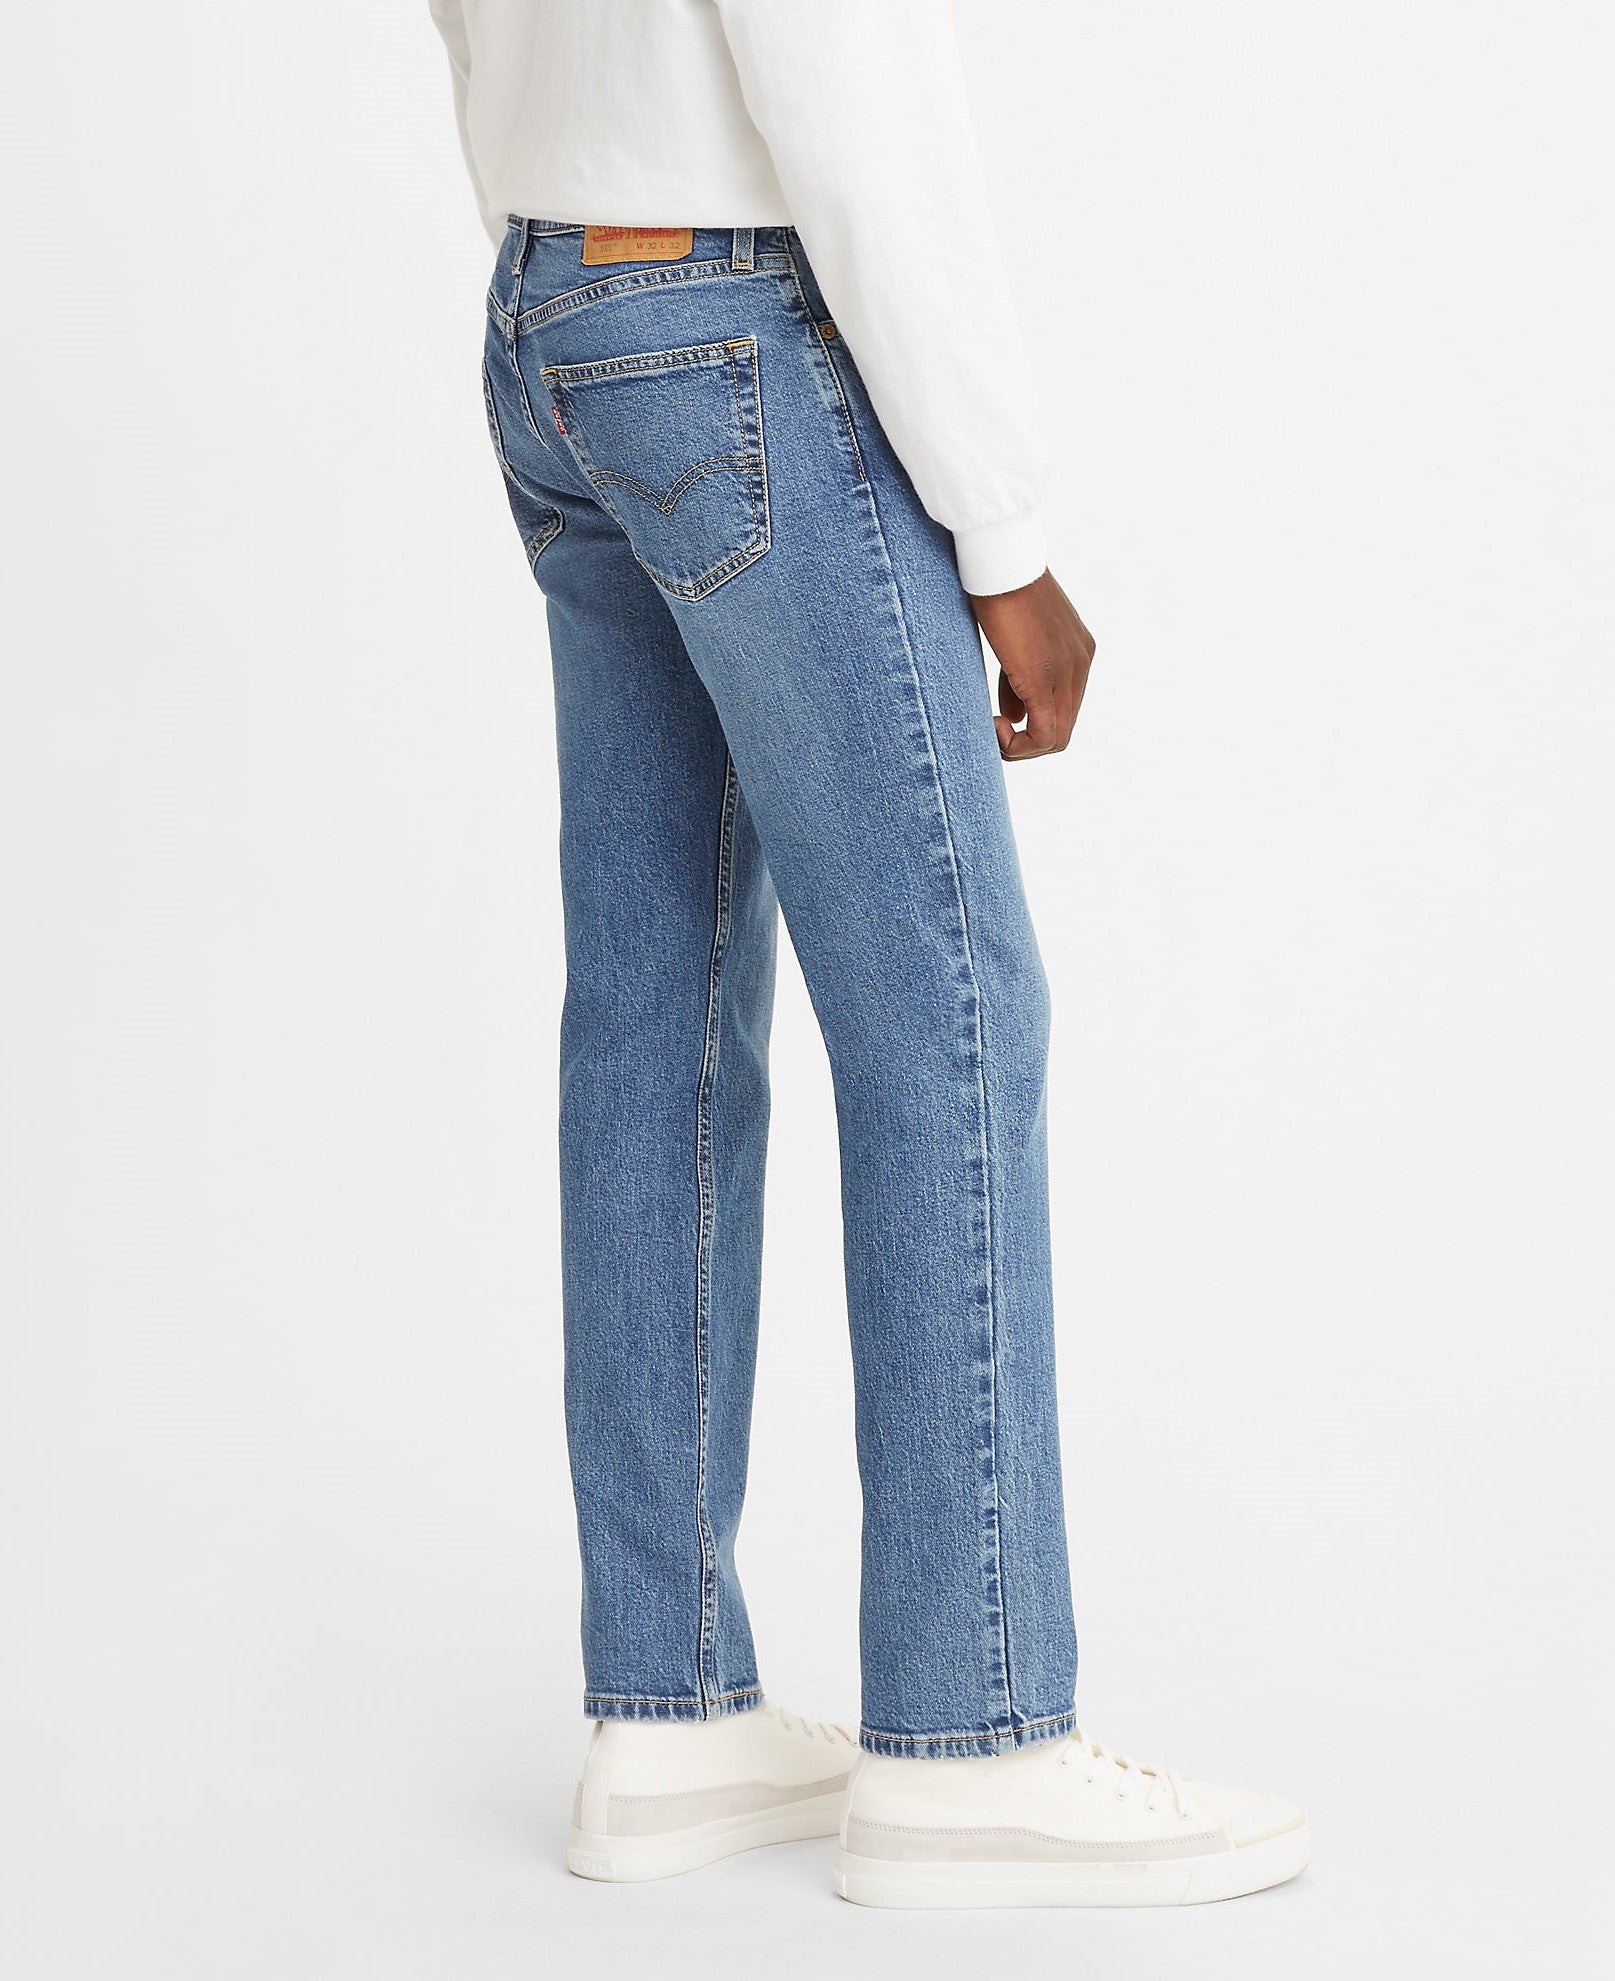 pantalones-jeans-levis-straus-511-slim-p-caballer-1